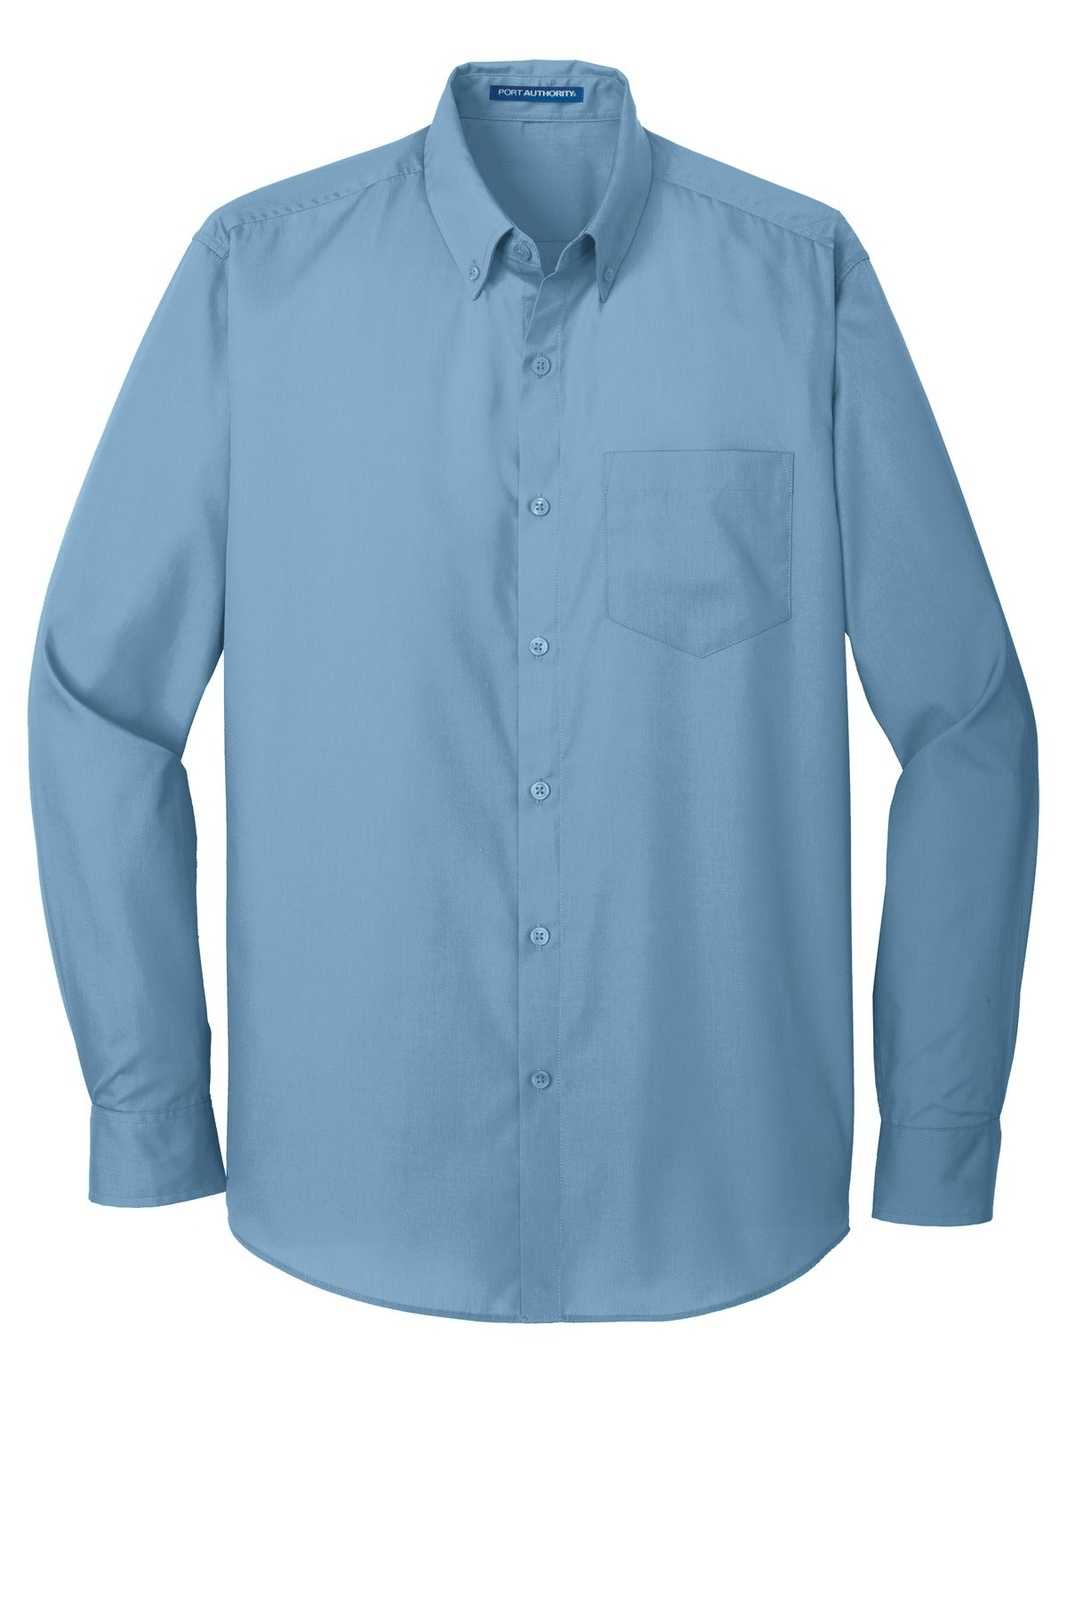 Port Authority W100 Long Sleeve Carefree Poplin Shirt - Carolina Blue - HIT a Double - 5